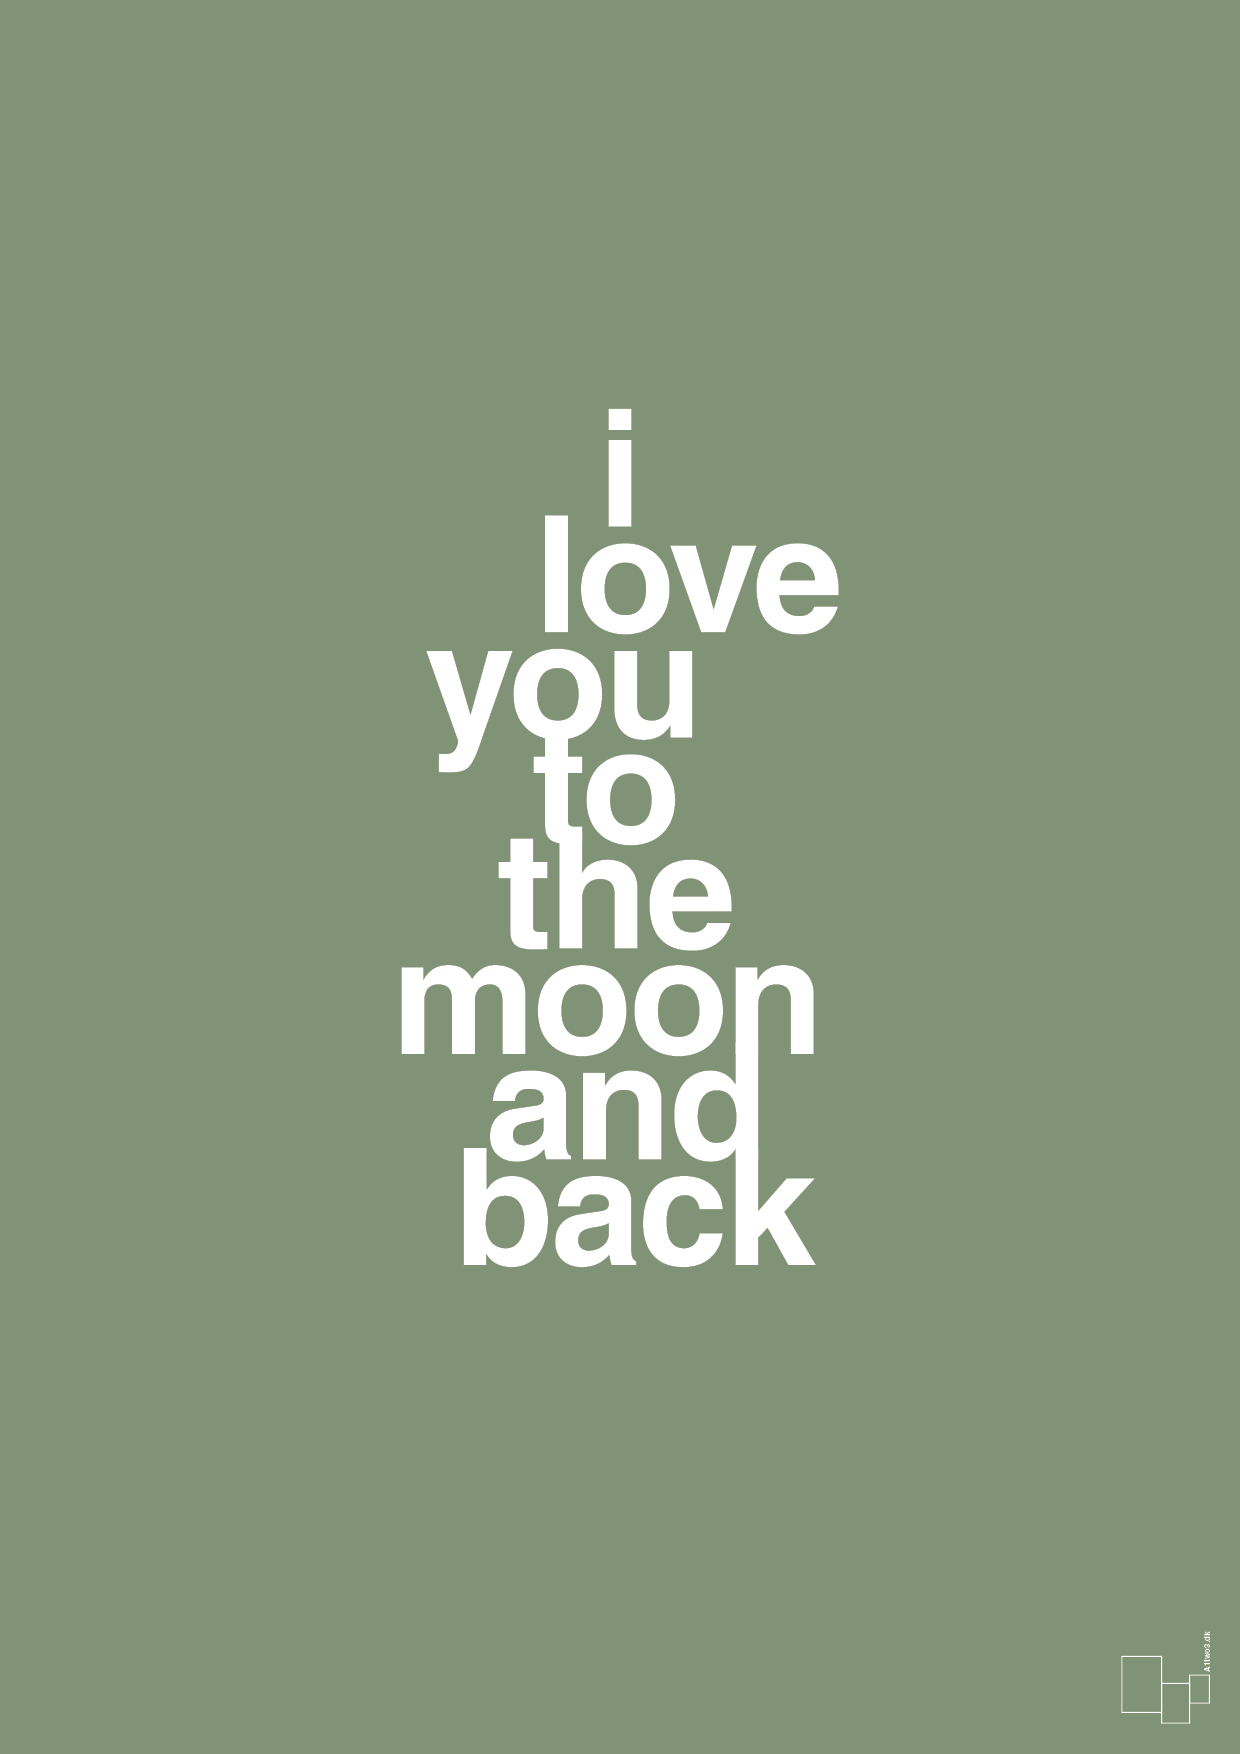 i love you to the moon and back - Plakat med Ordsprog i Jade